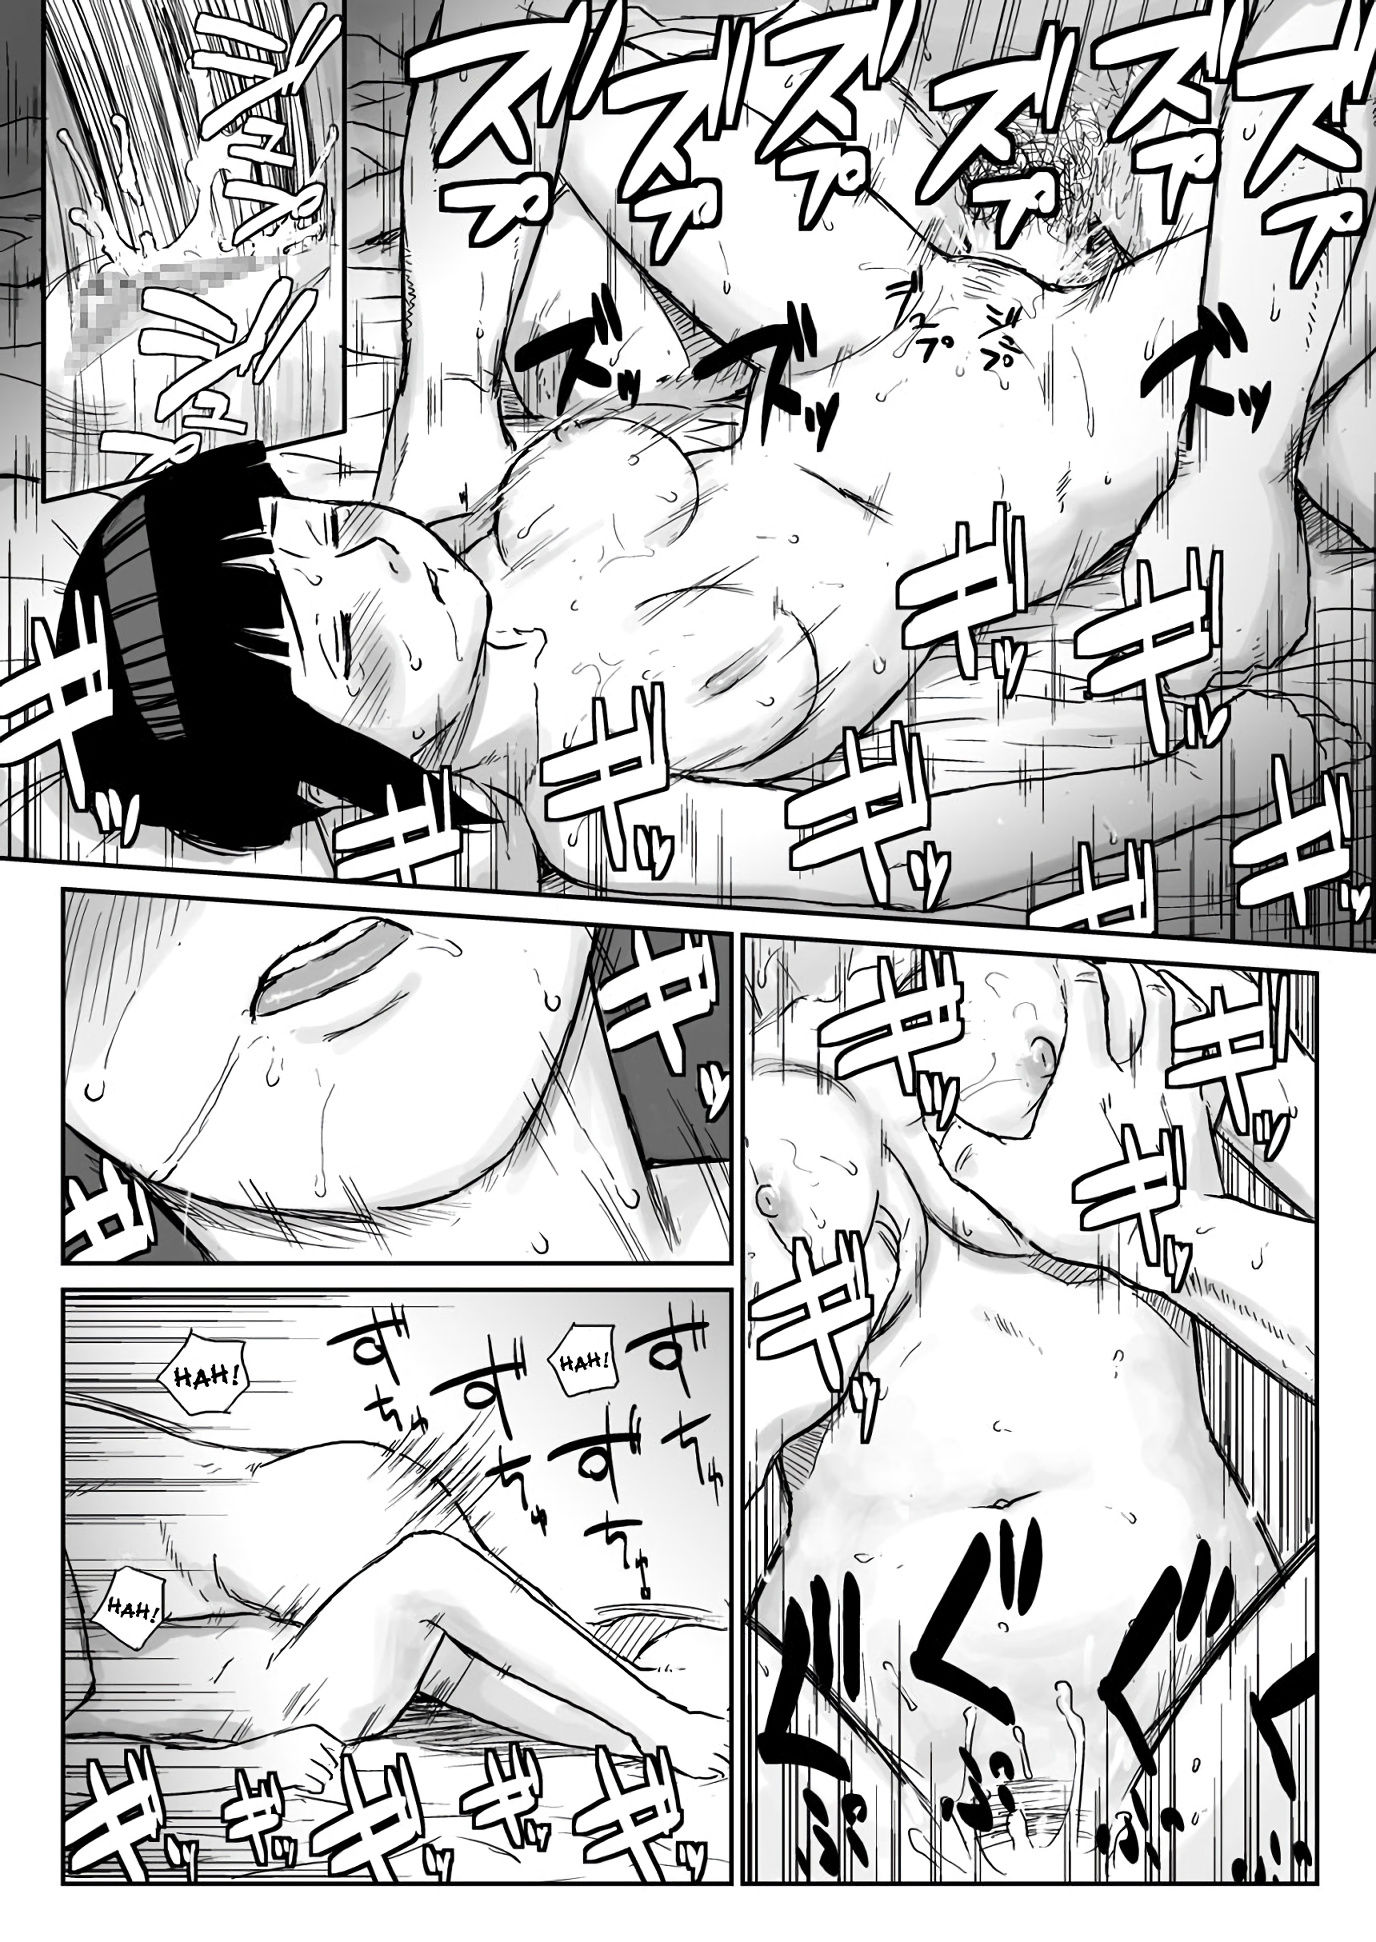 Ninja dependence vol. 3 hentai manga picture 11